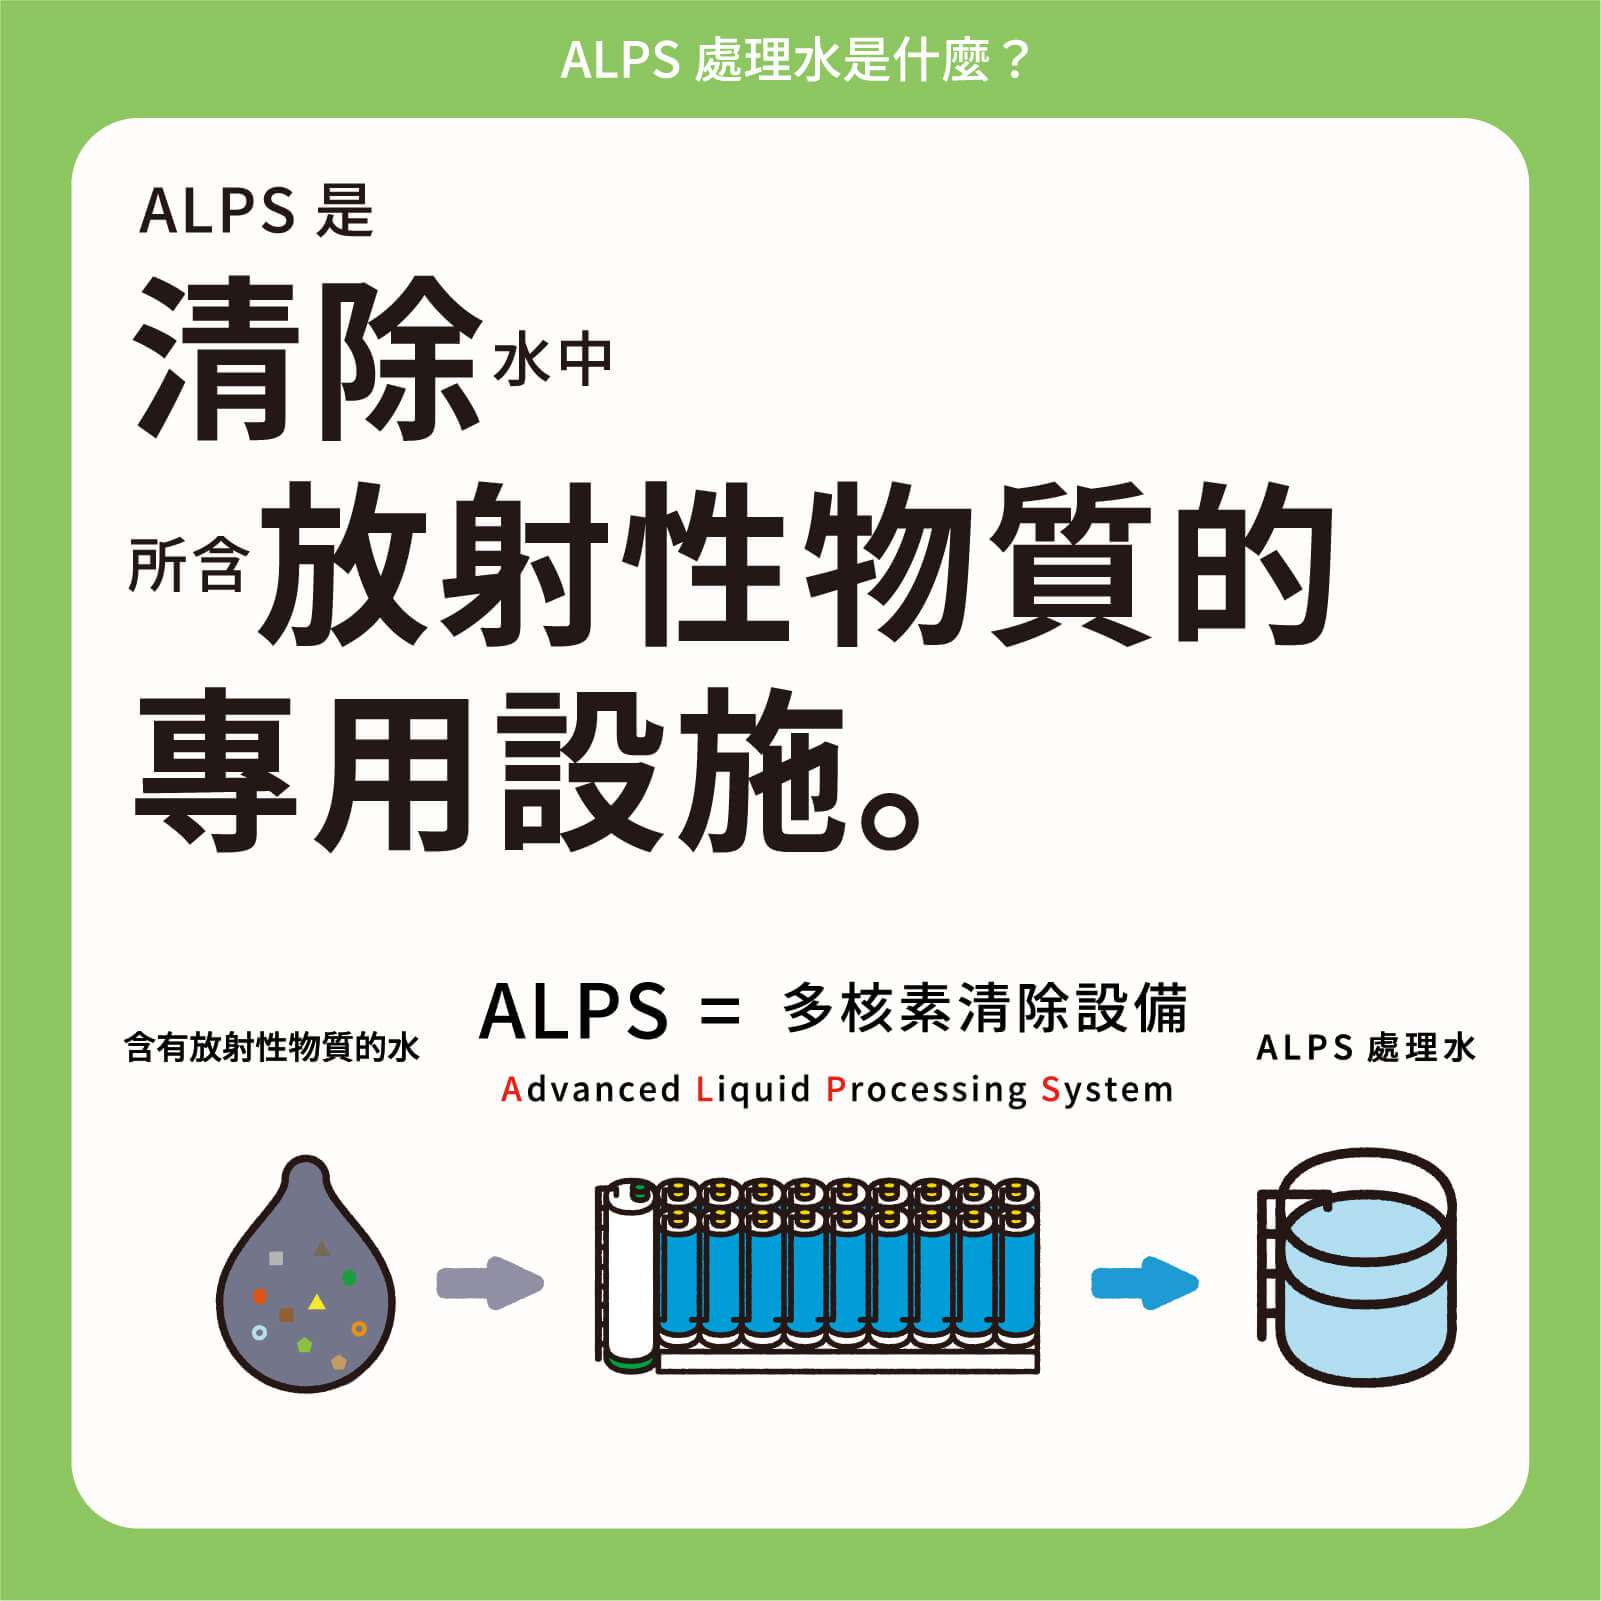 ALPS是清除水中所含放射性物質的專用設施。